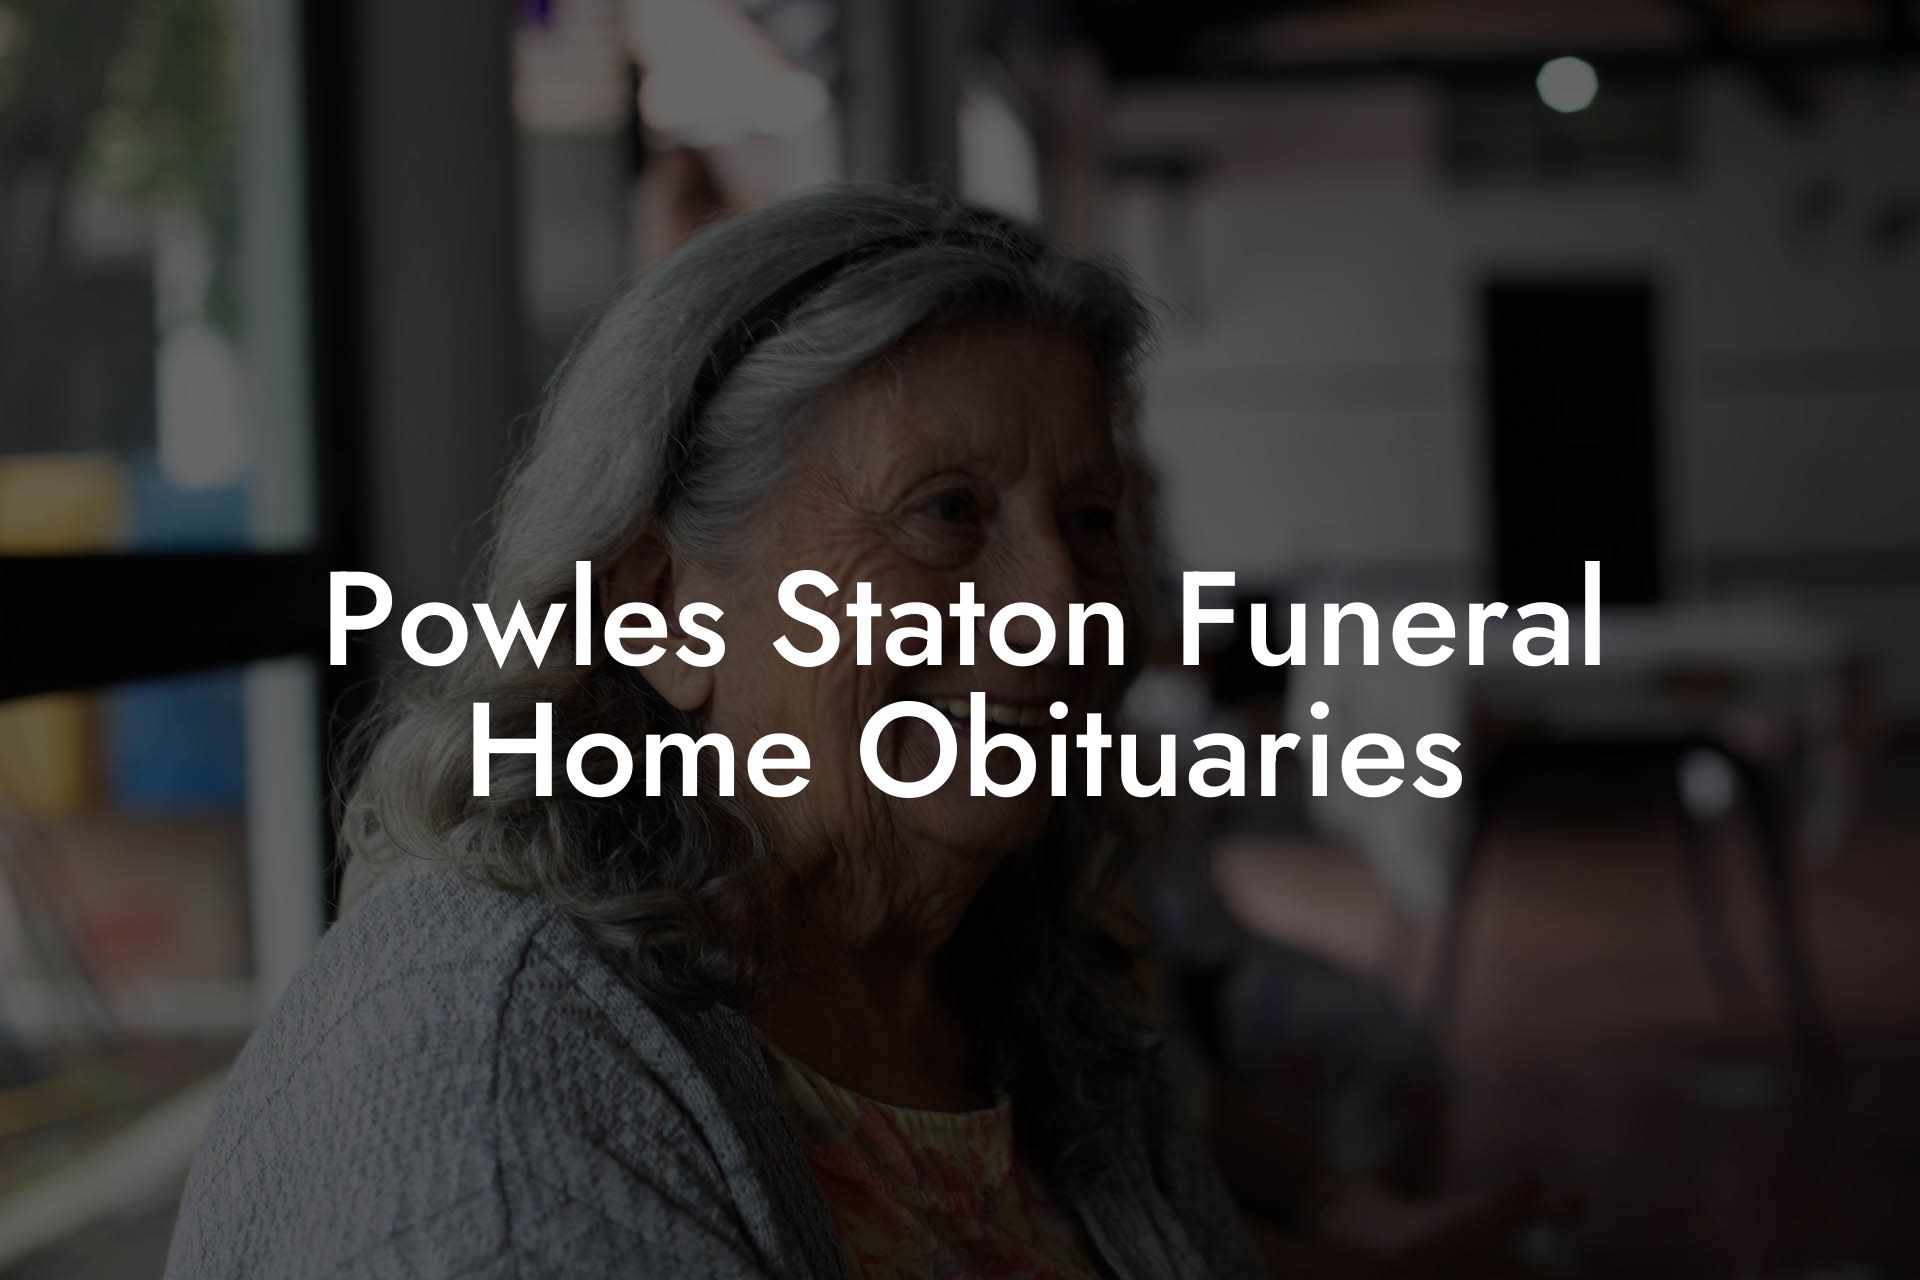 Powles Staton Funeral Home Obituaries